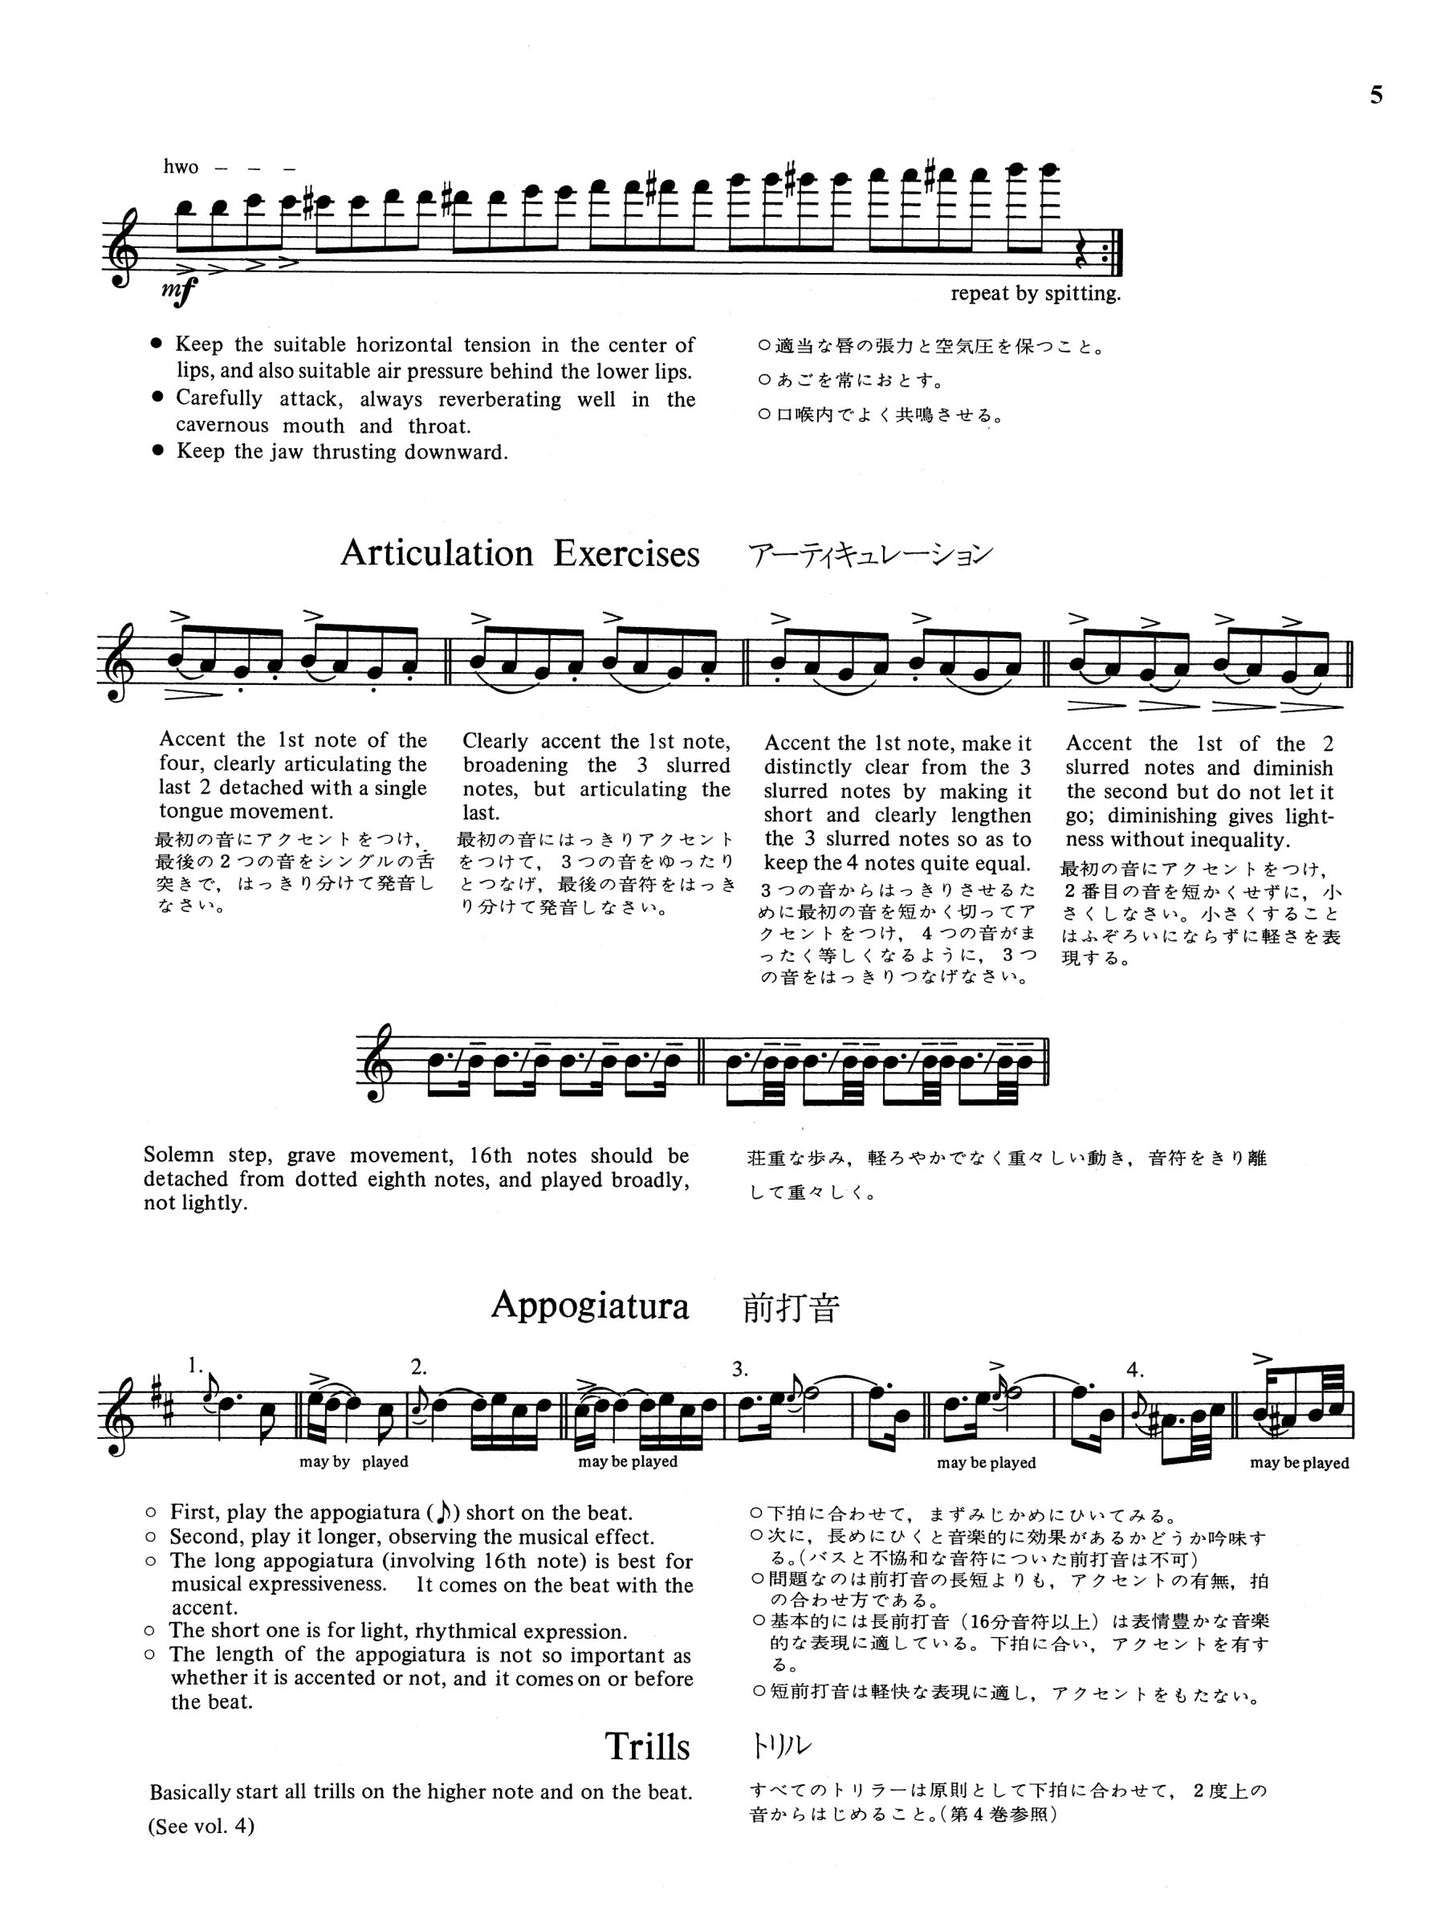 Suzuki Flute School - Volume 5 Flute Part Book (Revised Edition)